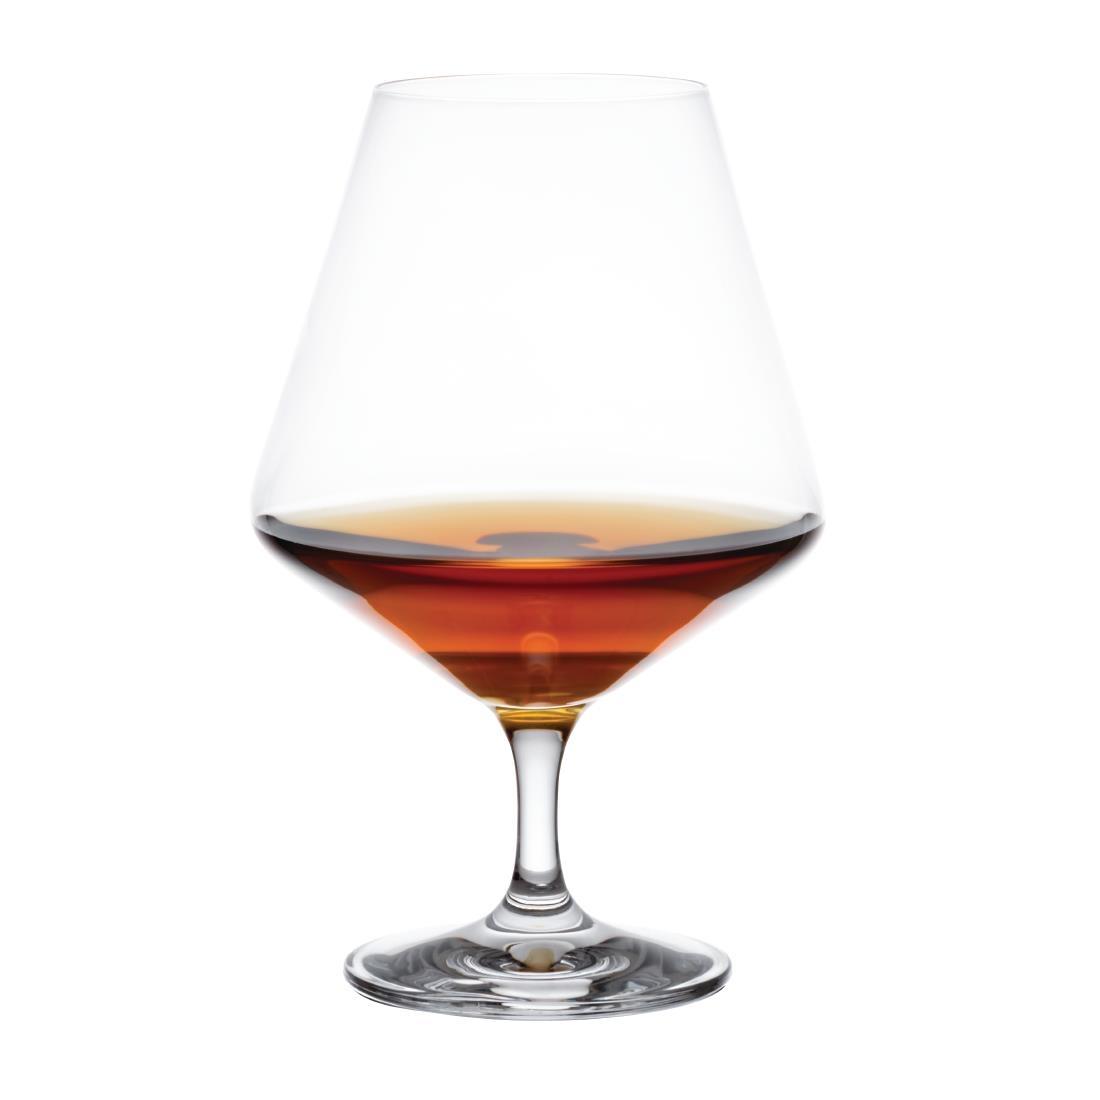 Schott Zwiesel Belfesta Crystal Cognac Glasses 616ml (Pack of 6) - GD905  - 2